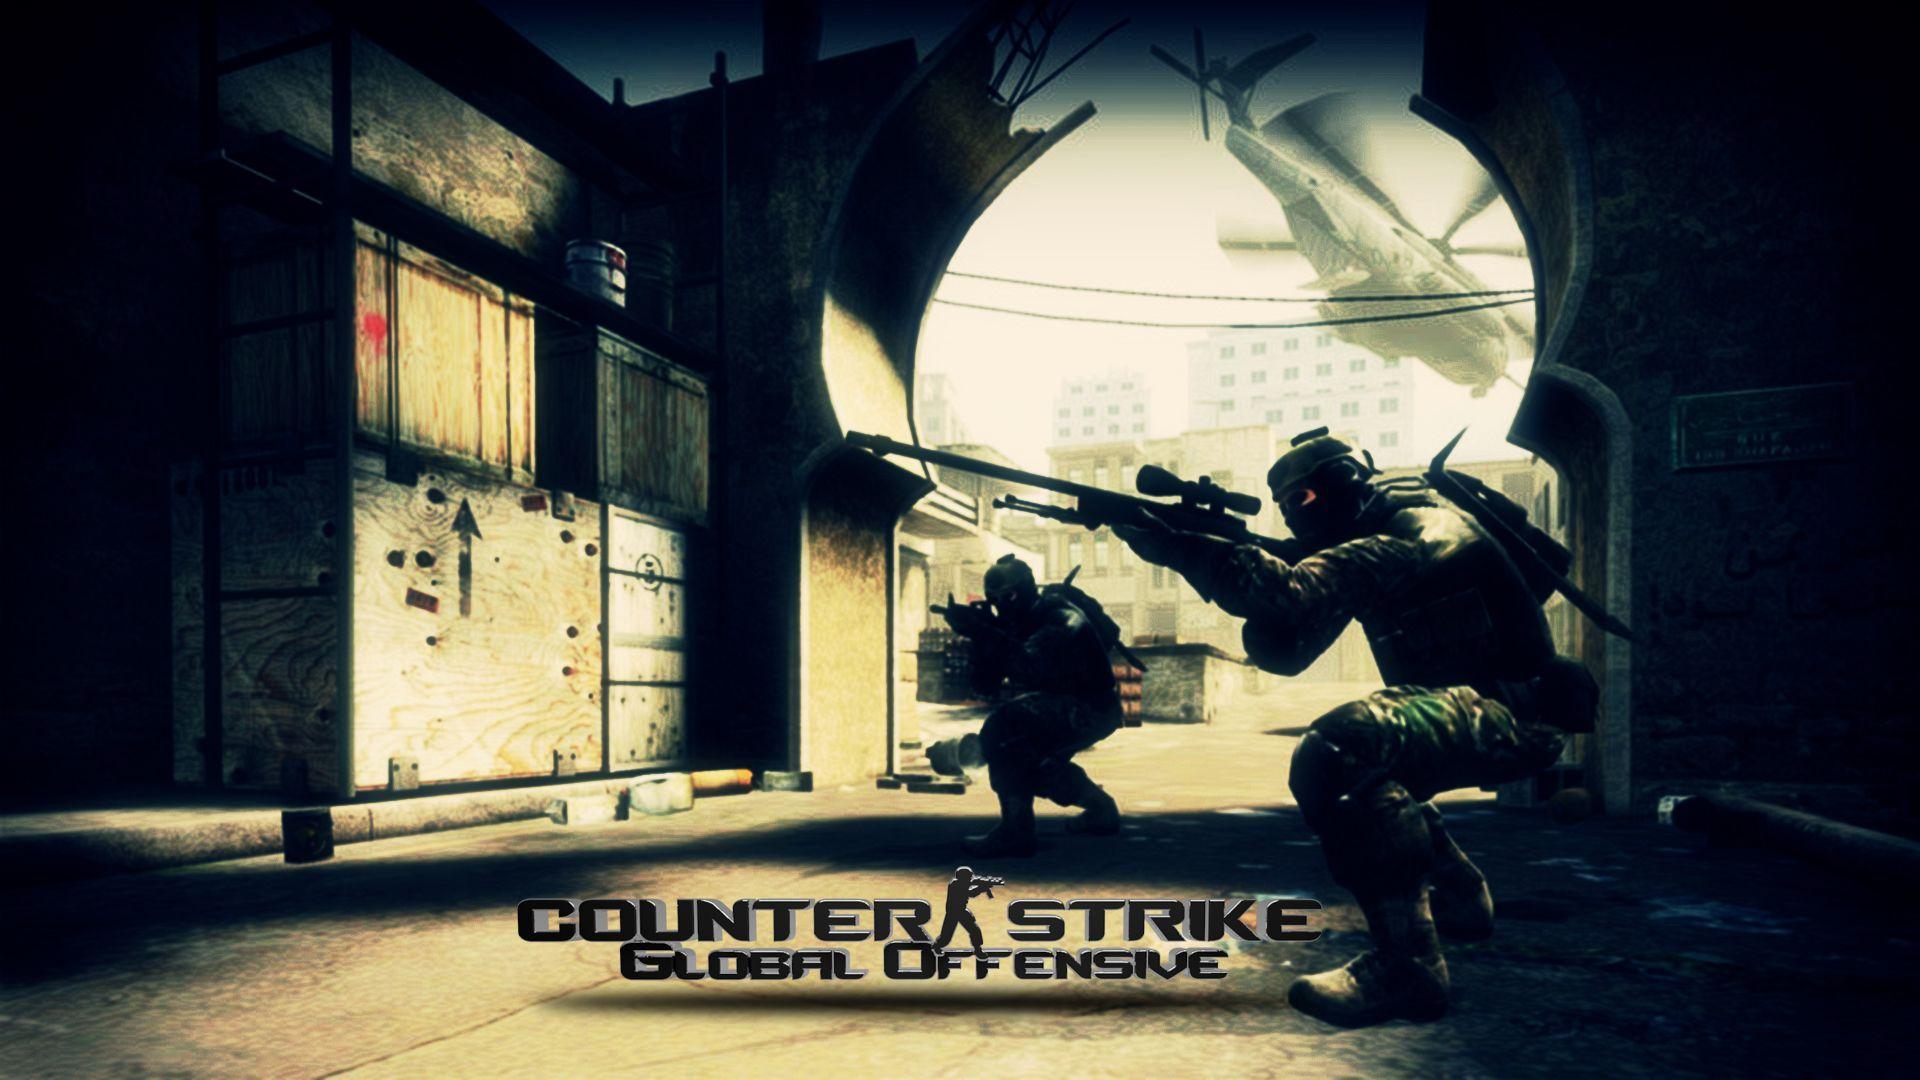 Wallpaper : CS GO Team, Counter Strike, Counter Strike Global Offensive  1920x1080 - FyörGyn - 1965249 - HD Wallpapers - WallHere